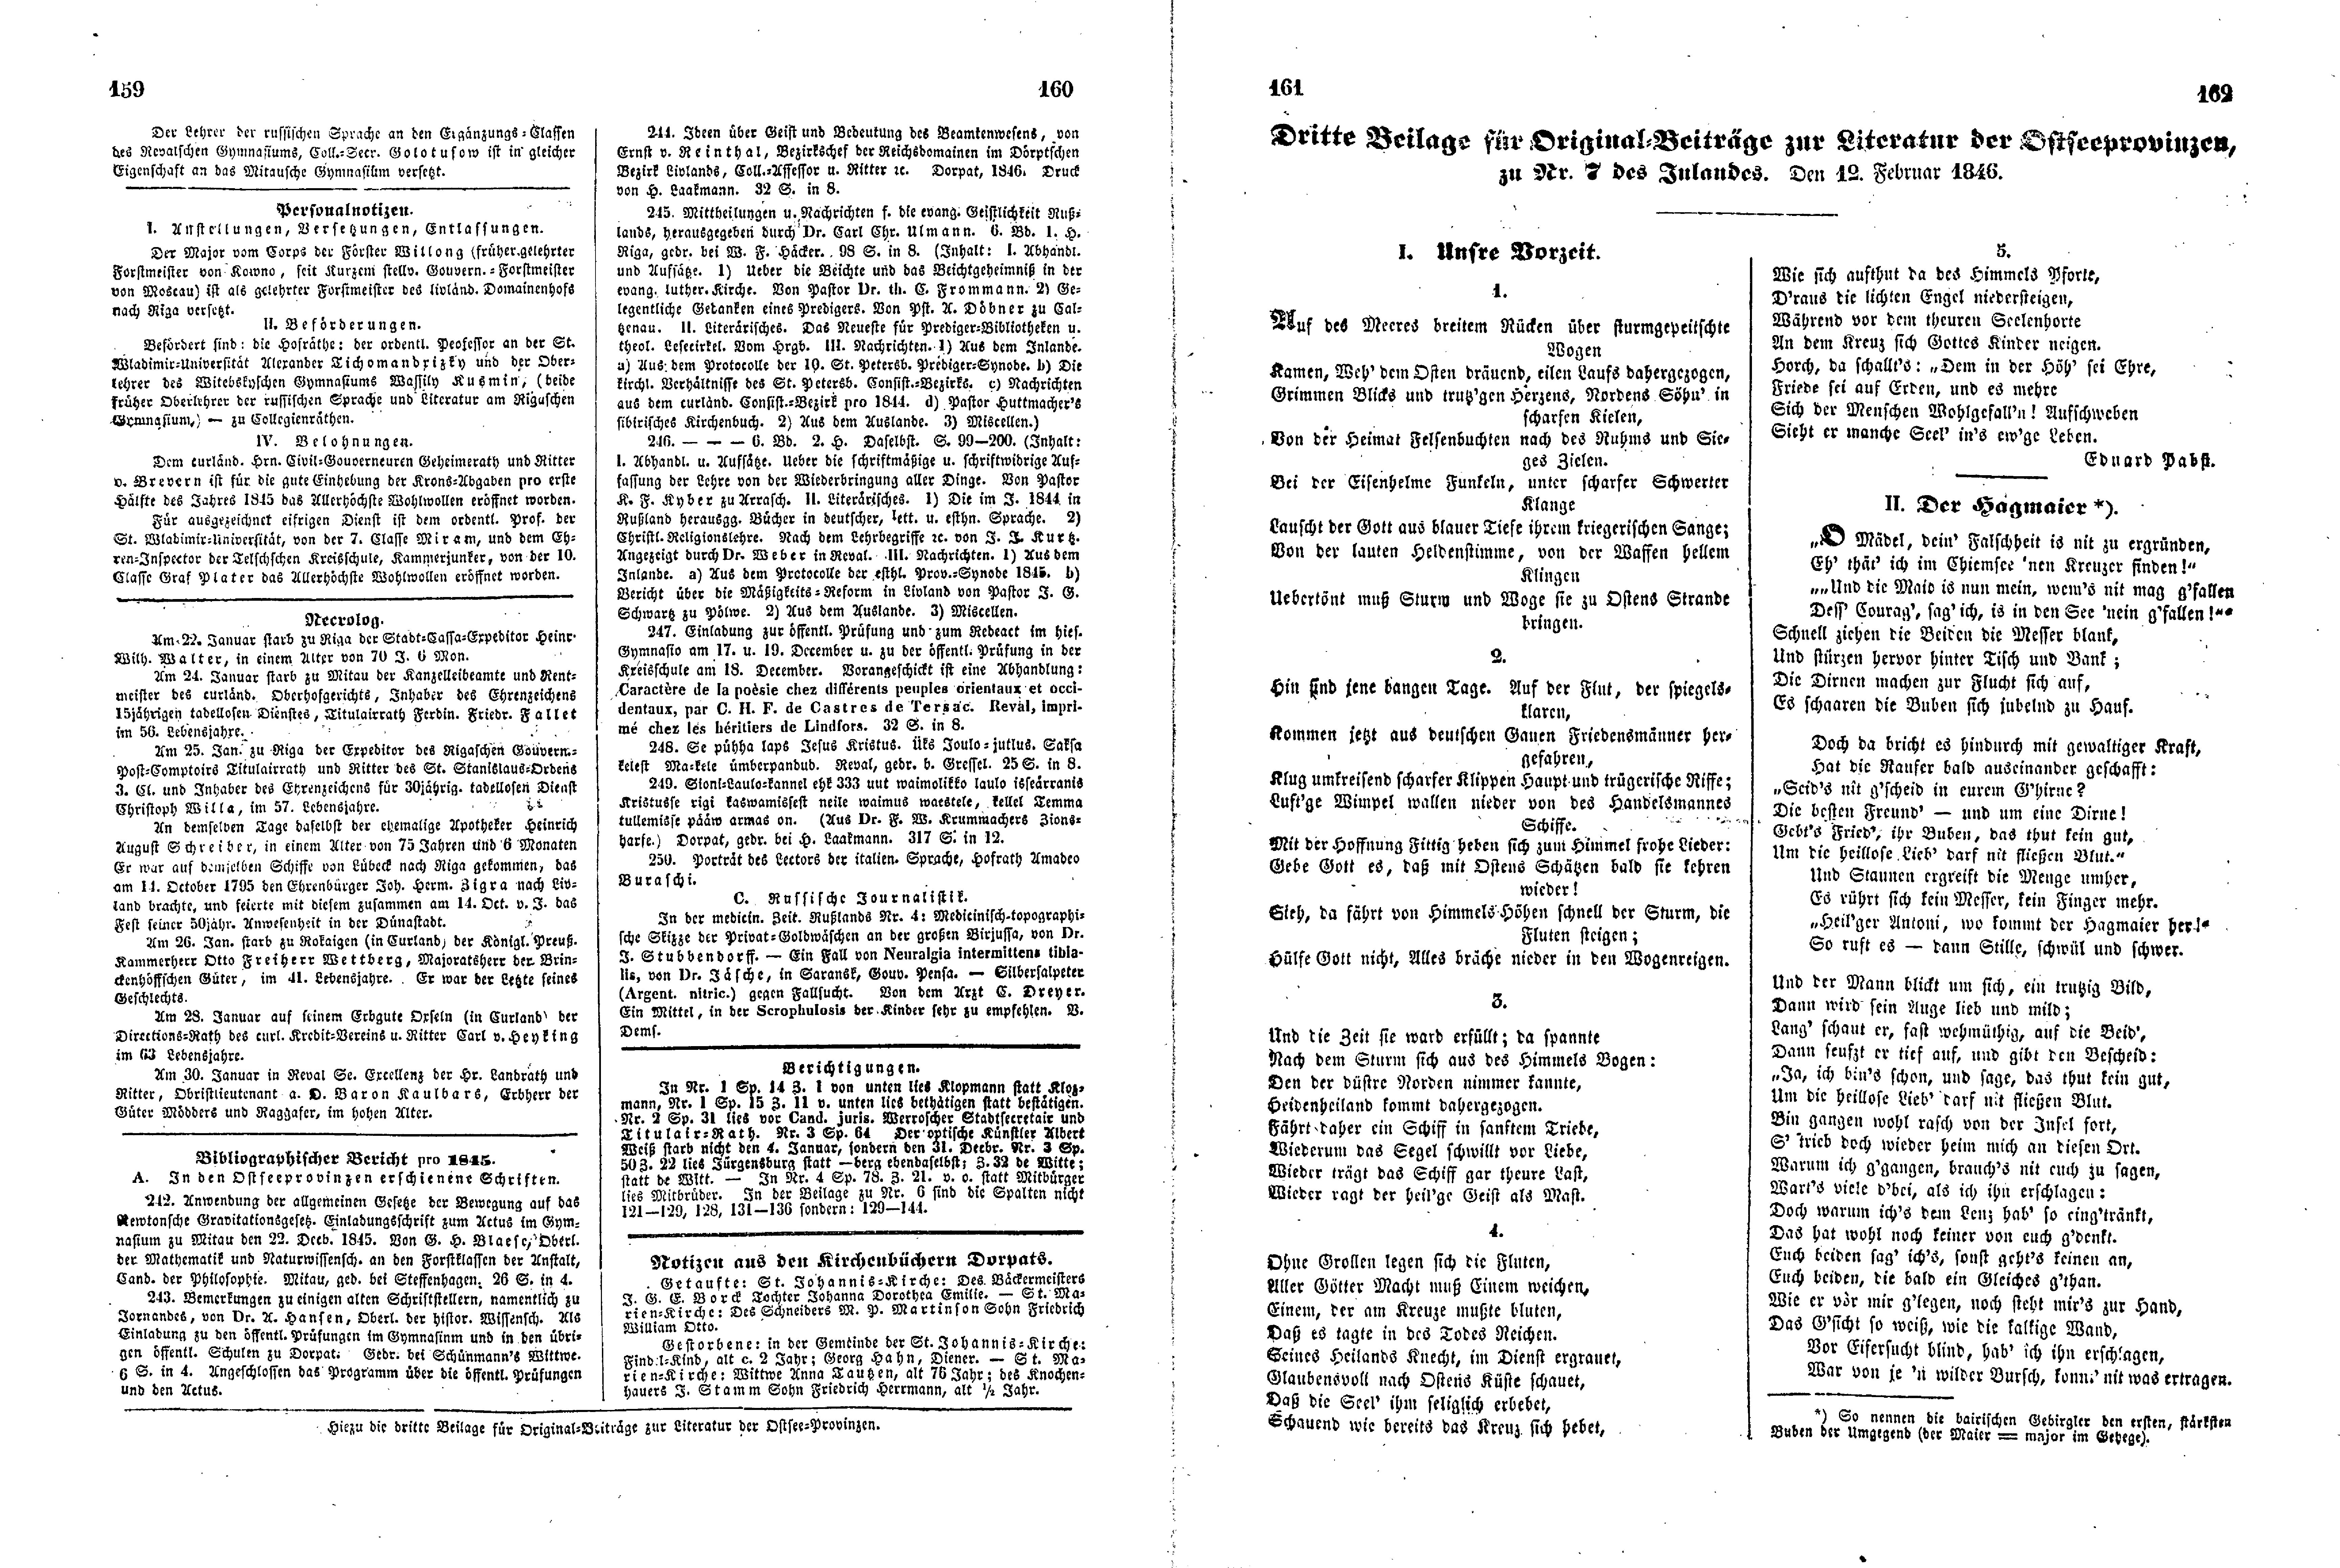 Das Inland [11] (1846) | 45. (159-162) Main body of text